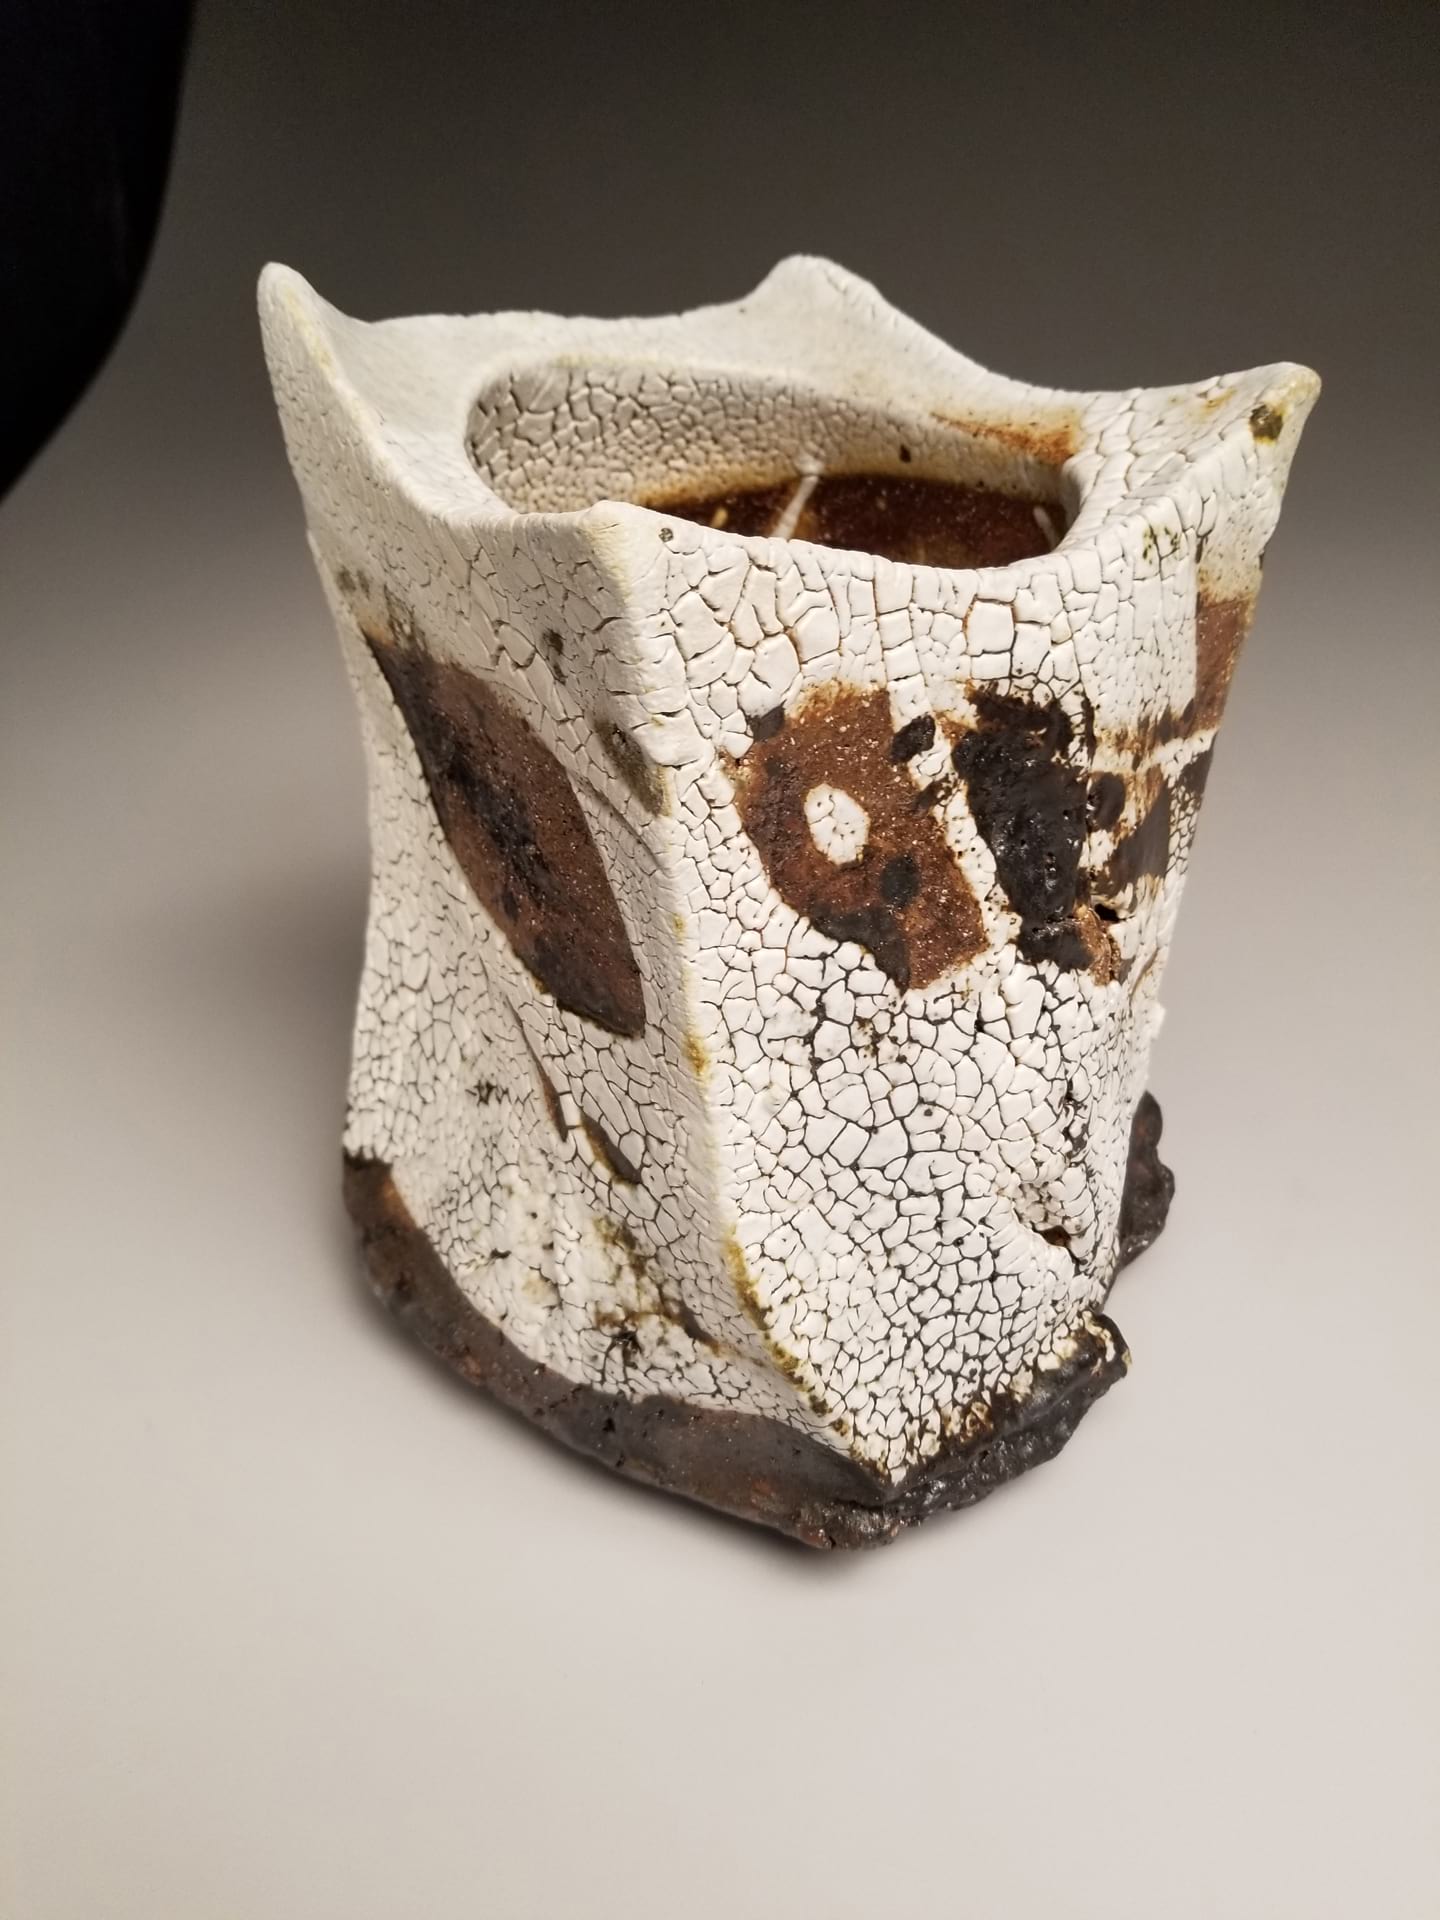 Ceramic sculpture by Peter Callas